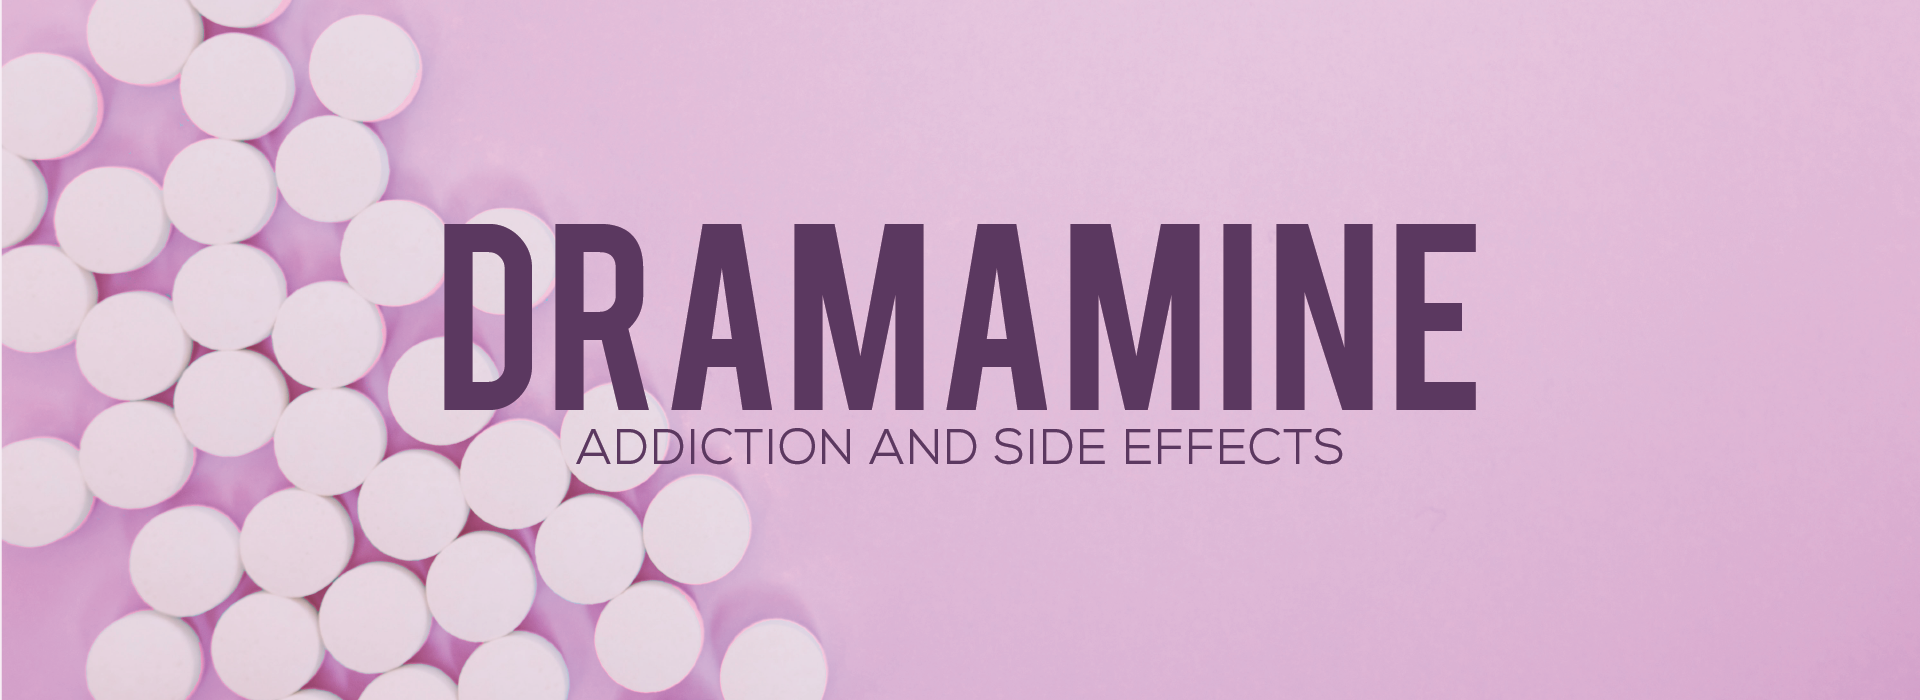 Dramamine Addiction Header